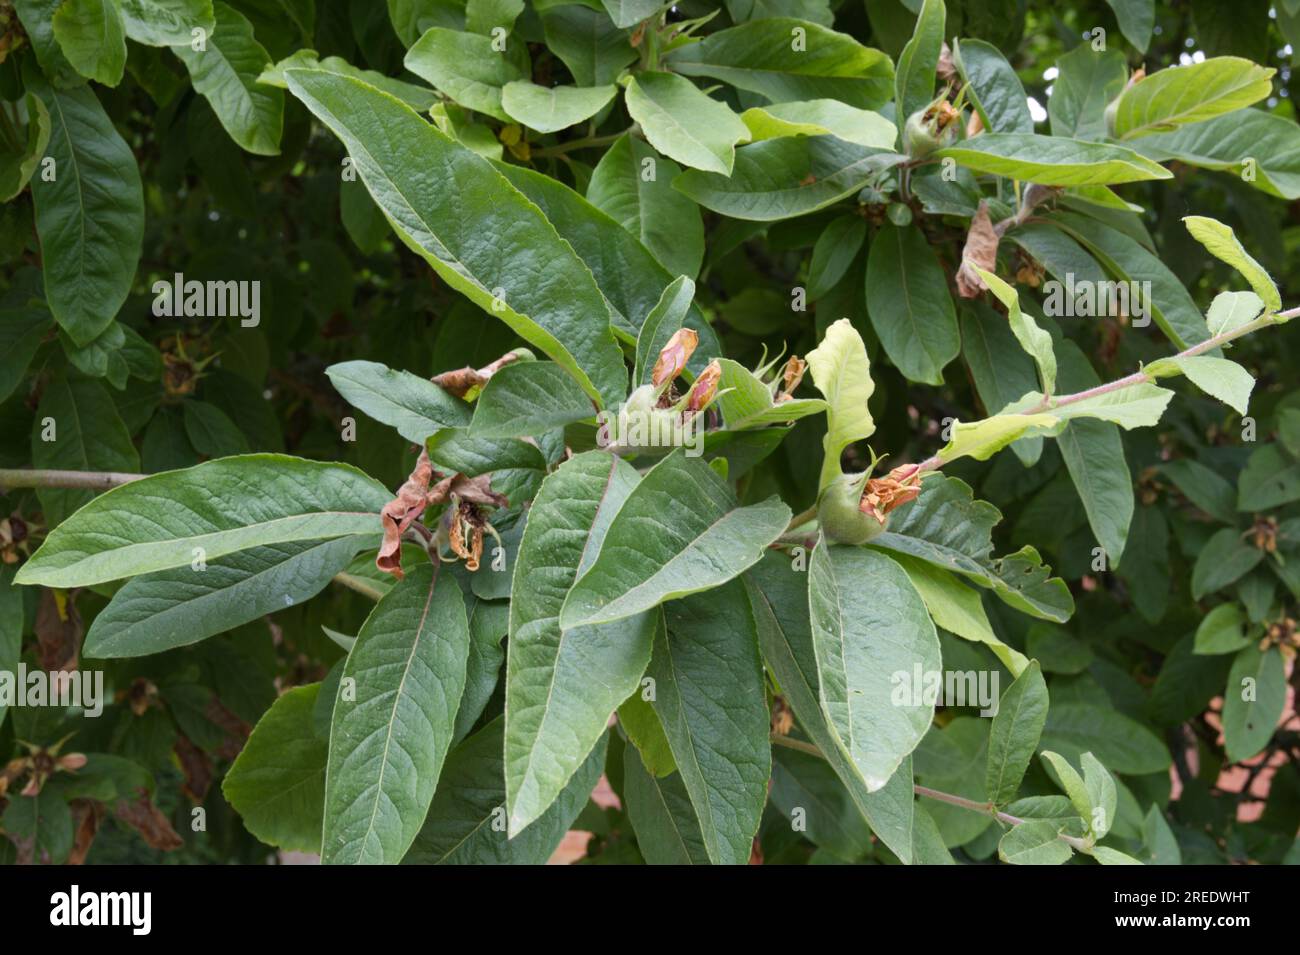 Young summer fruit of medlar or Mespilus germanica tree UK June Stock Photo